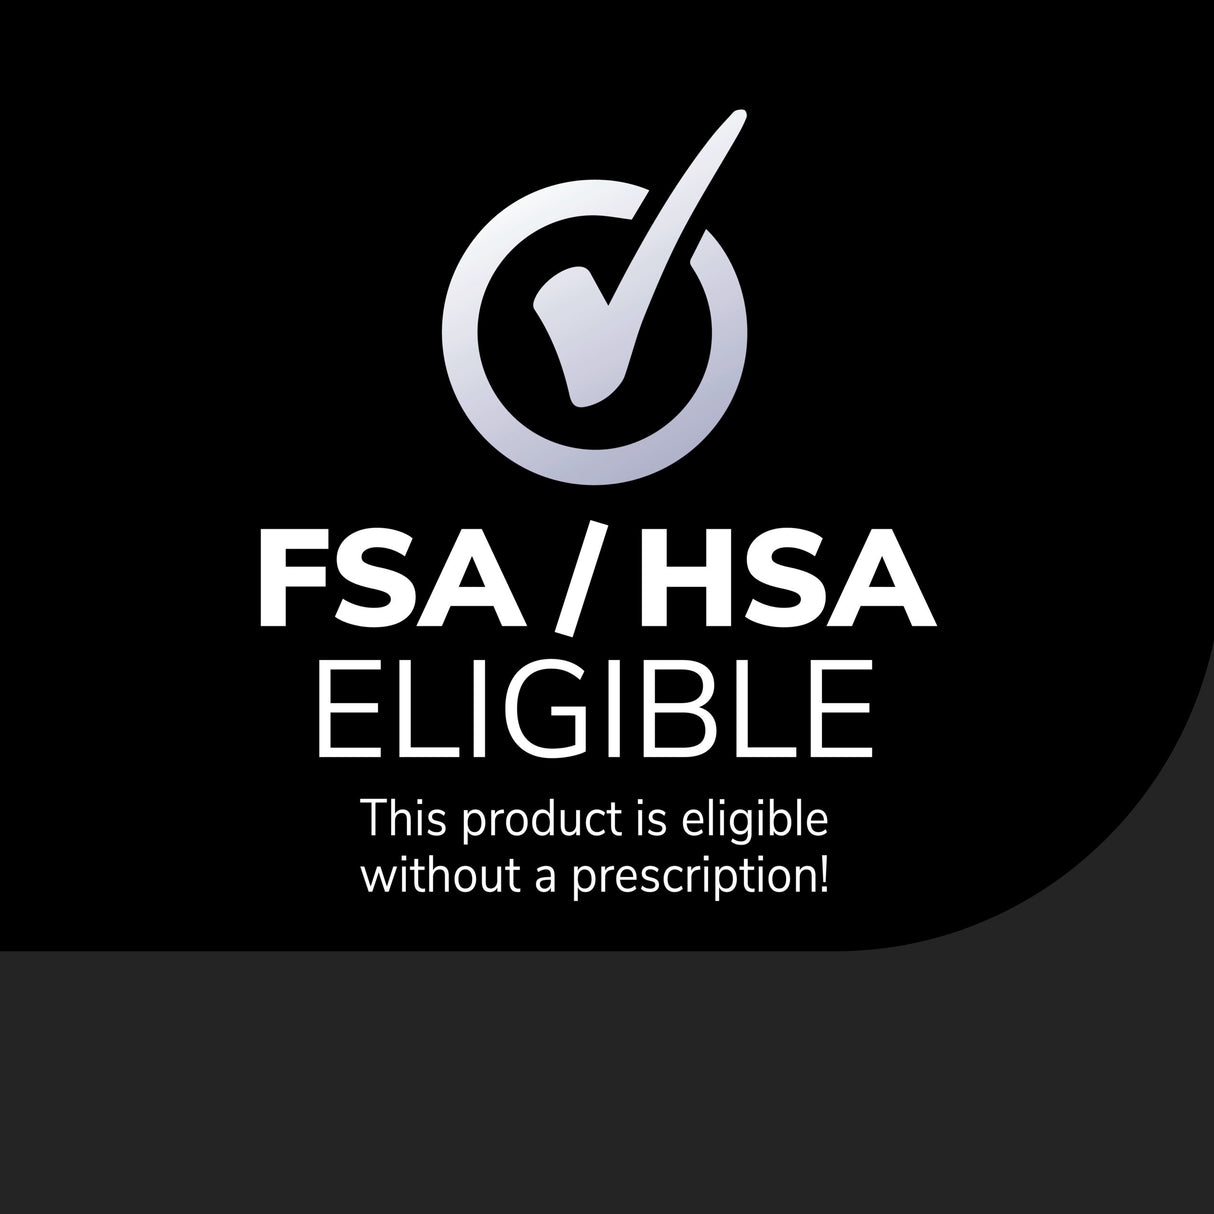 image of FSA/HSA eligible